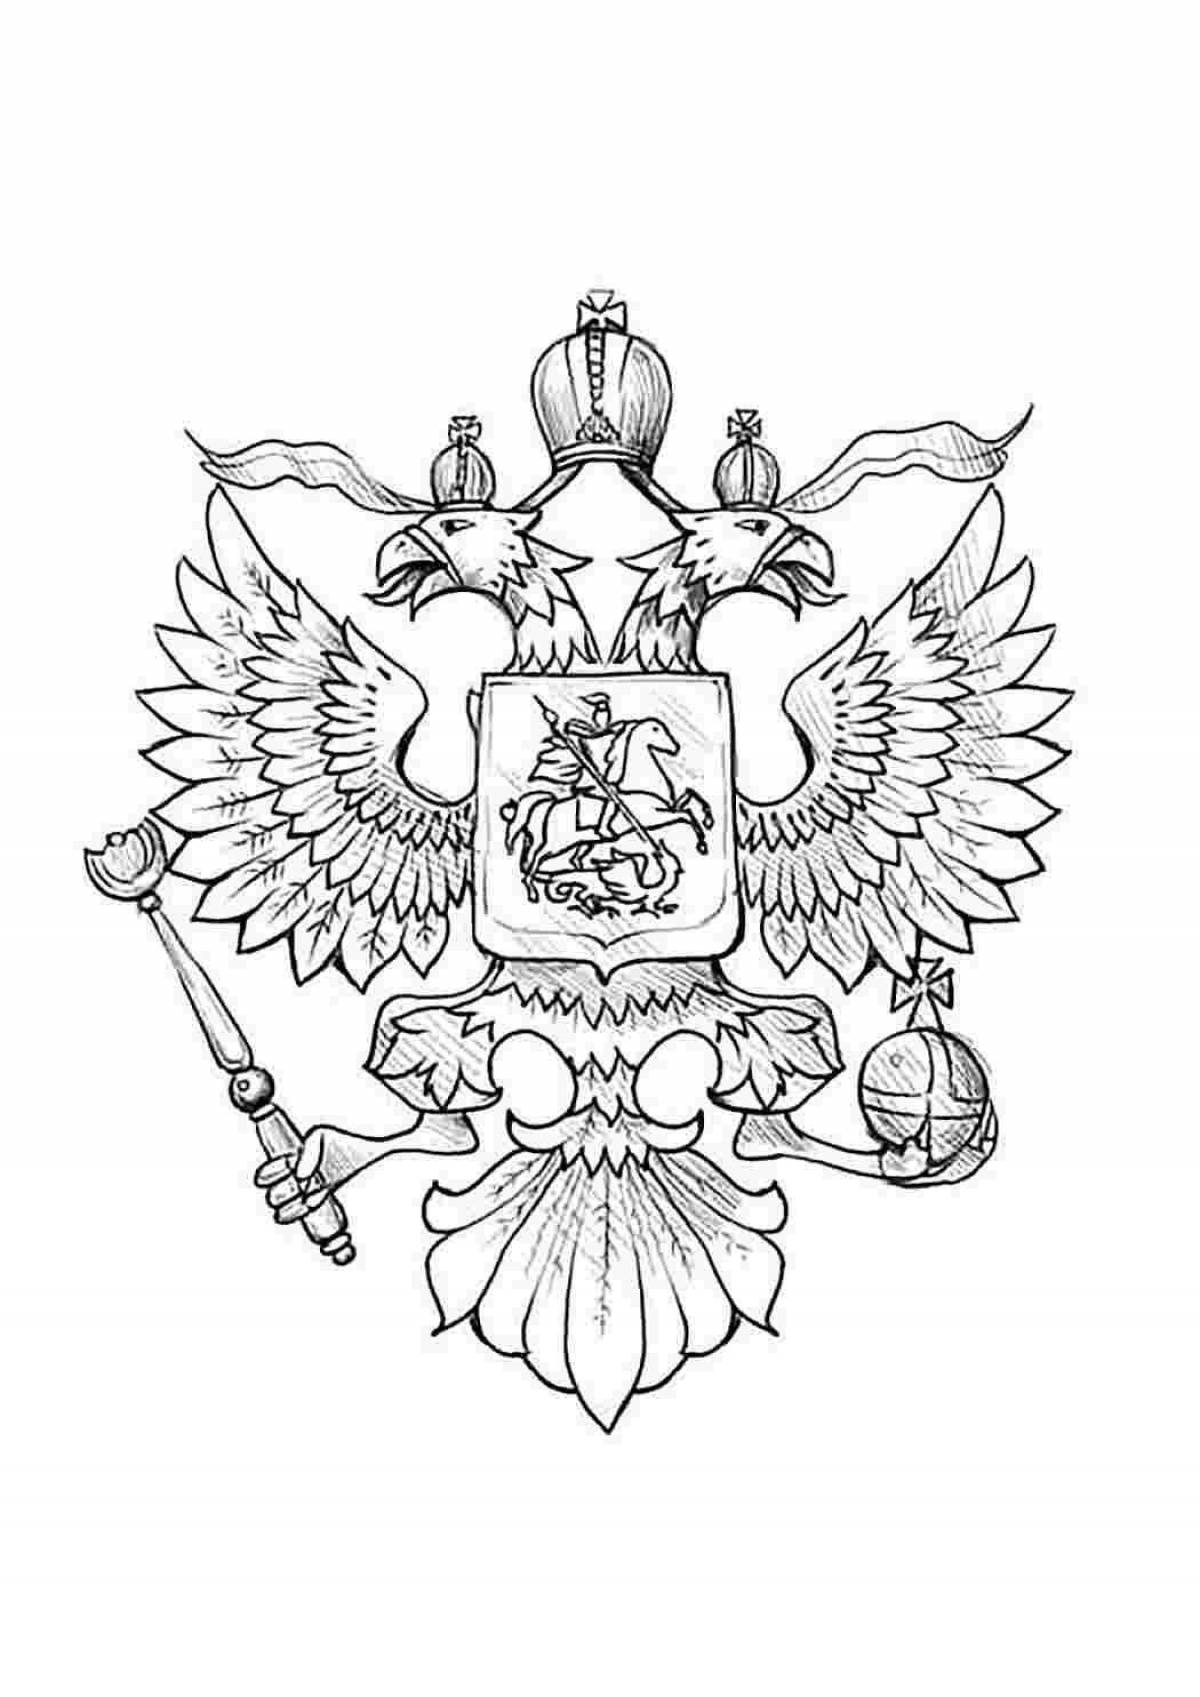 Terrific coat of arms of russia for preschoolers